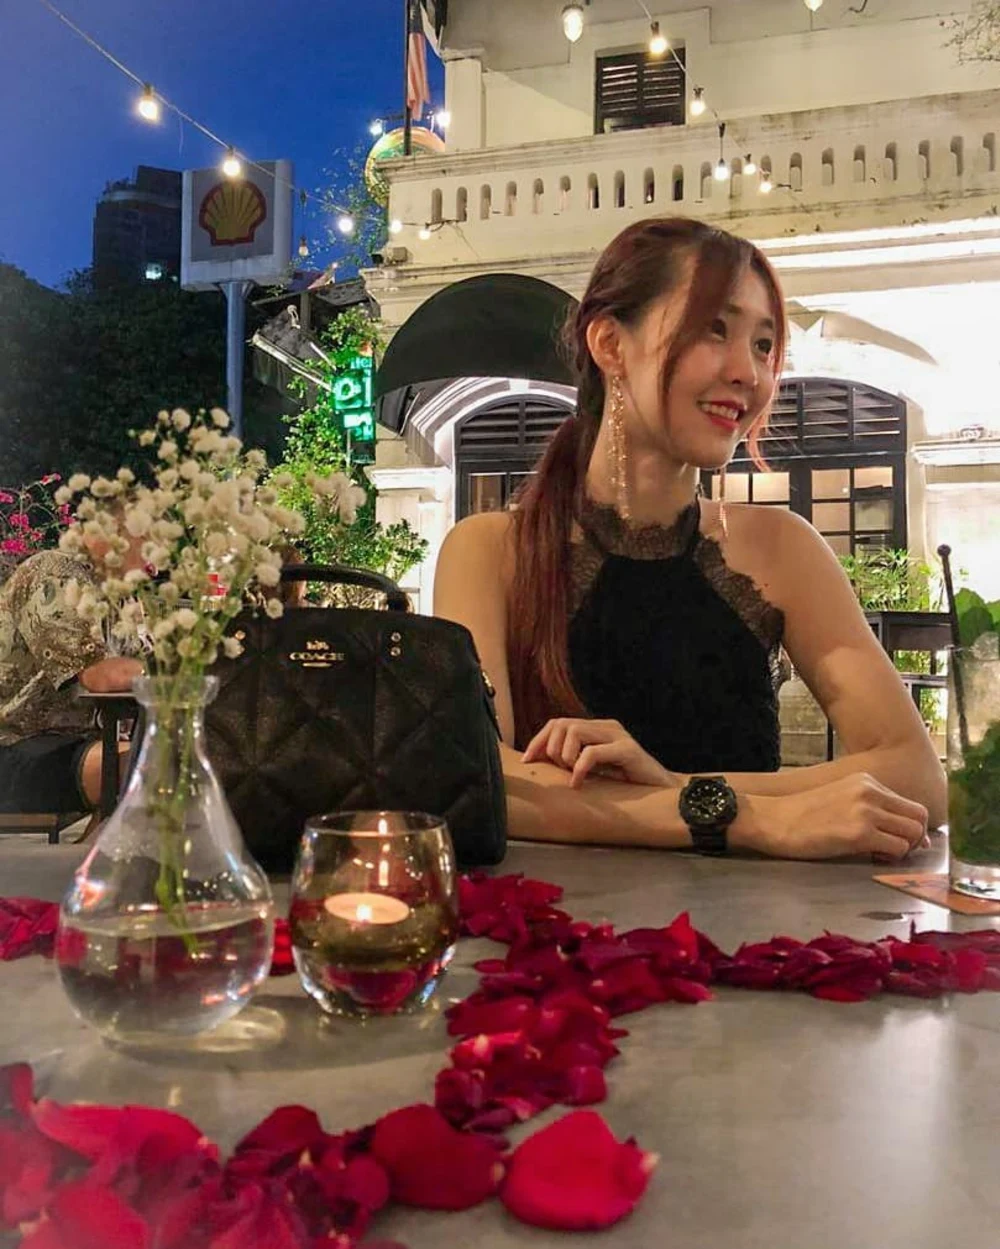 kl romantic restaurant pampas steakhouse old malaya